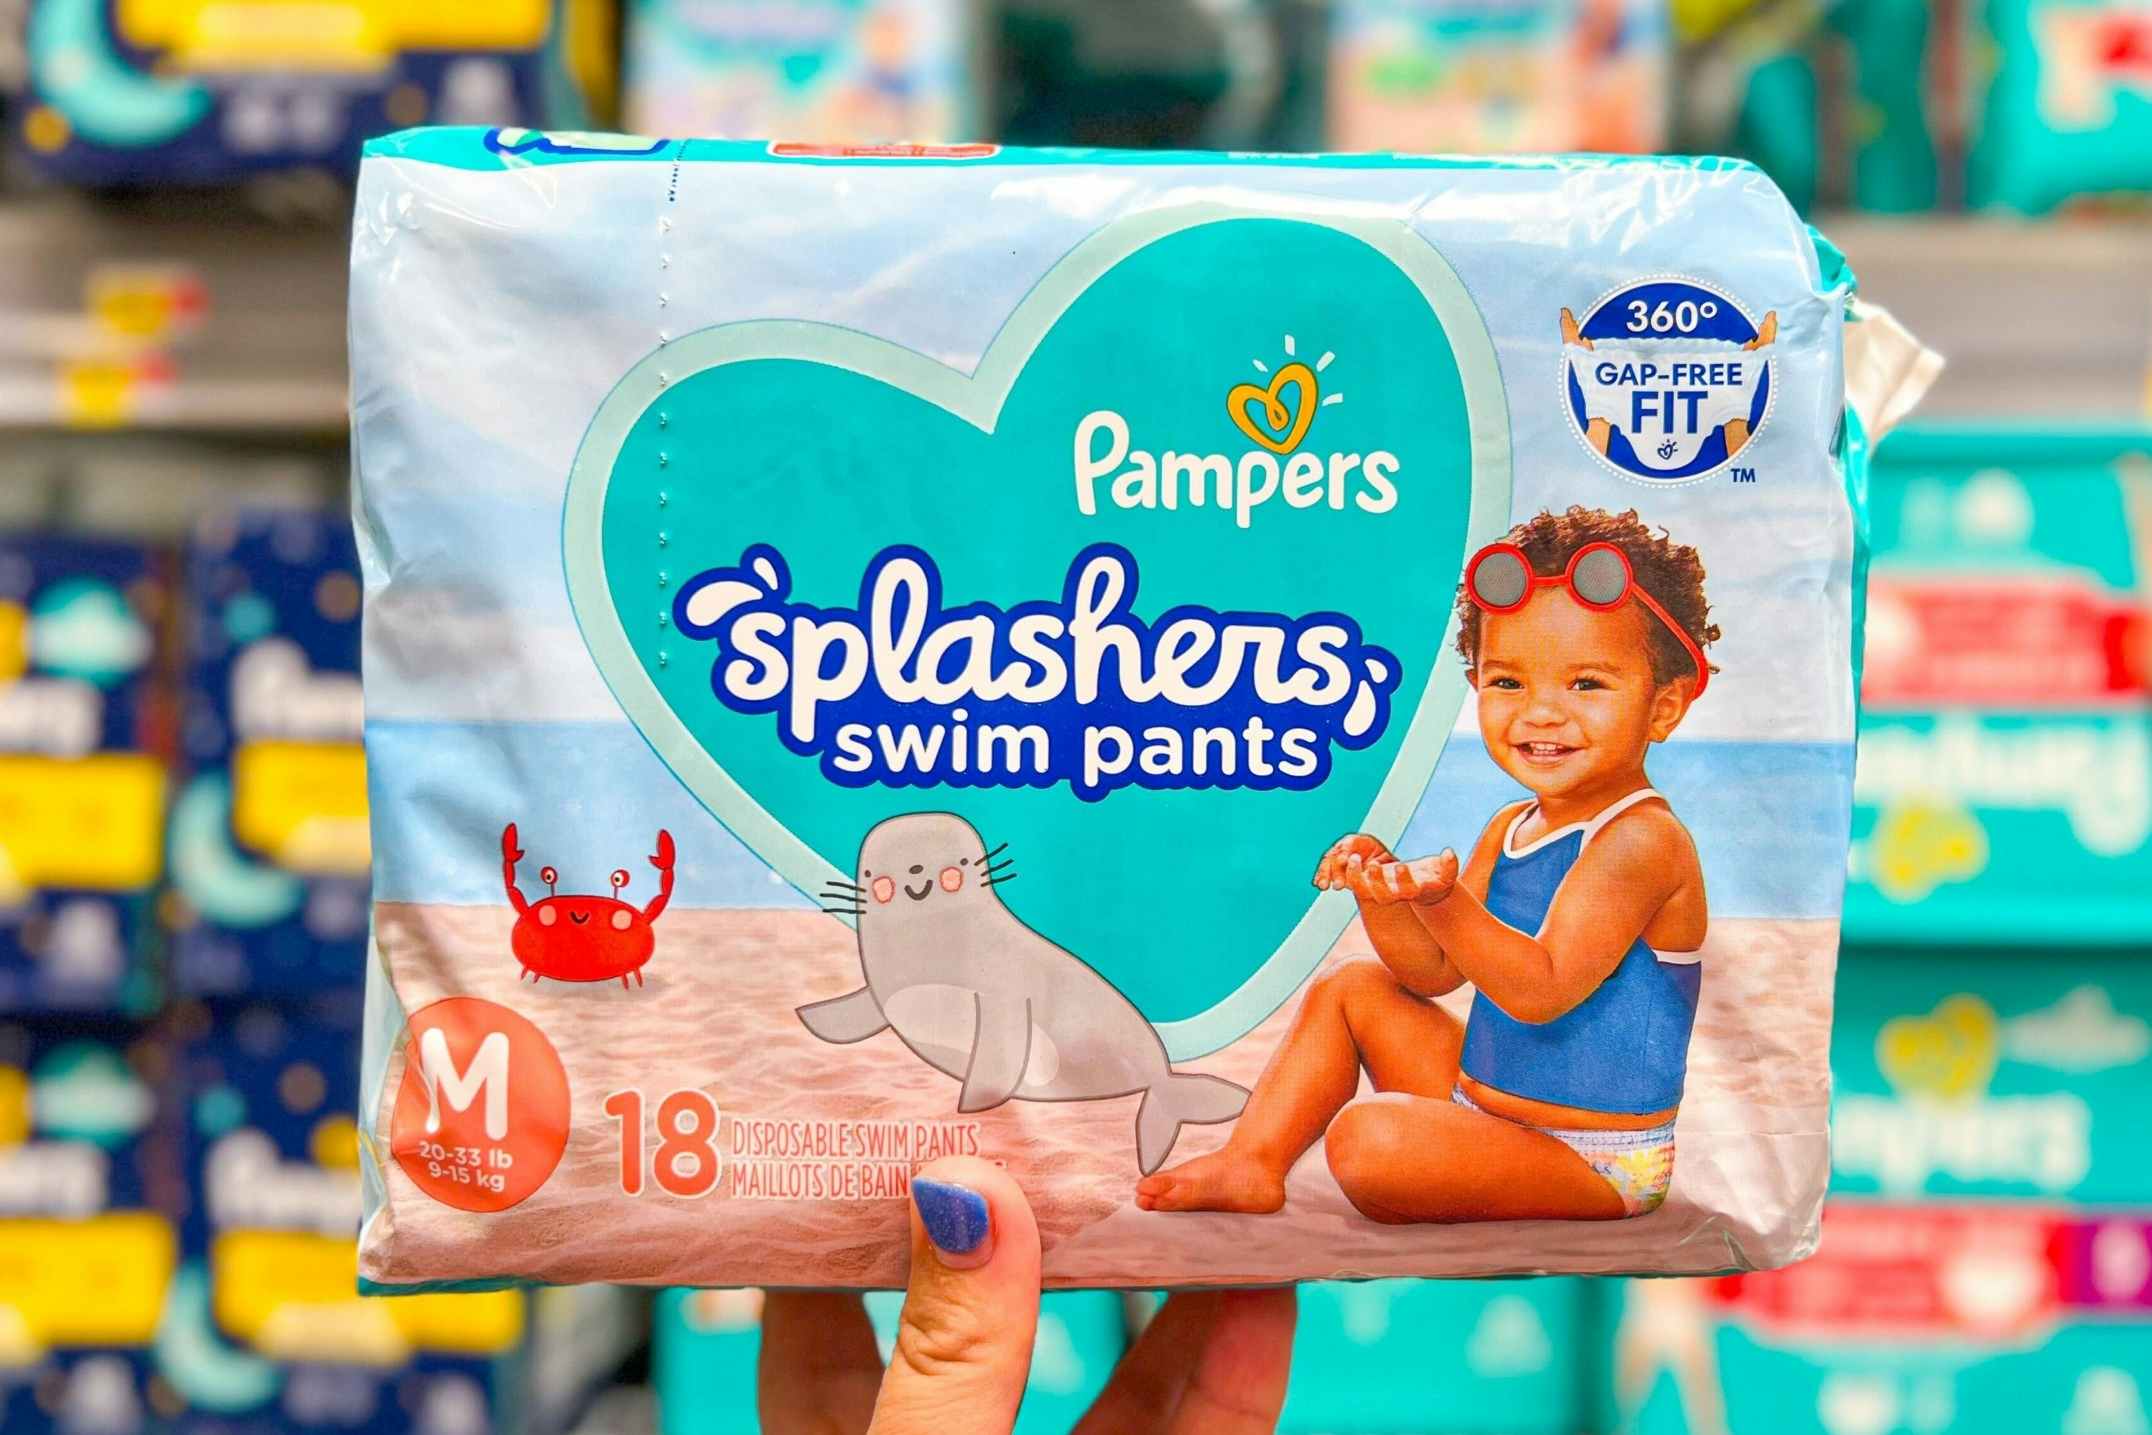 Pampers Splashers Swim Pants, Just $4.33 at CVS